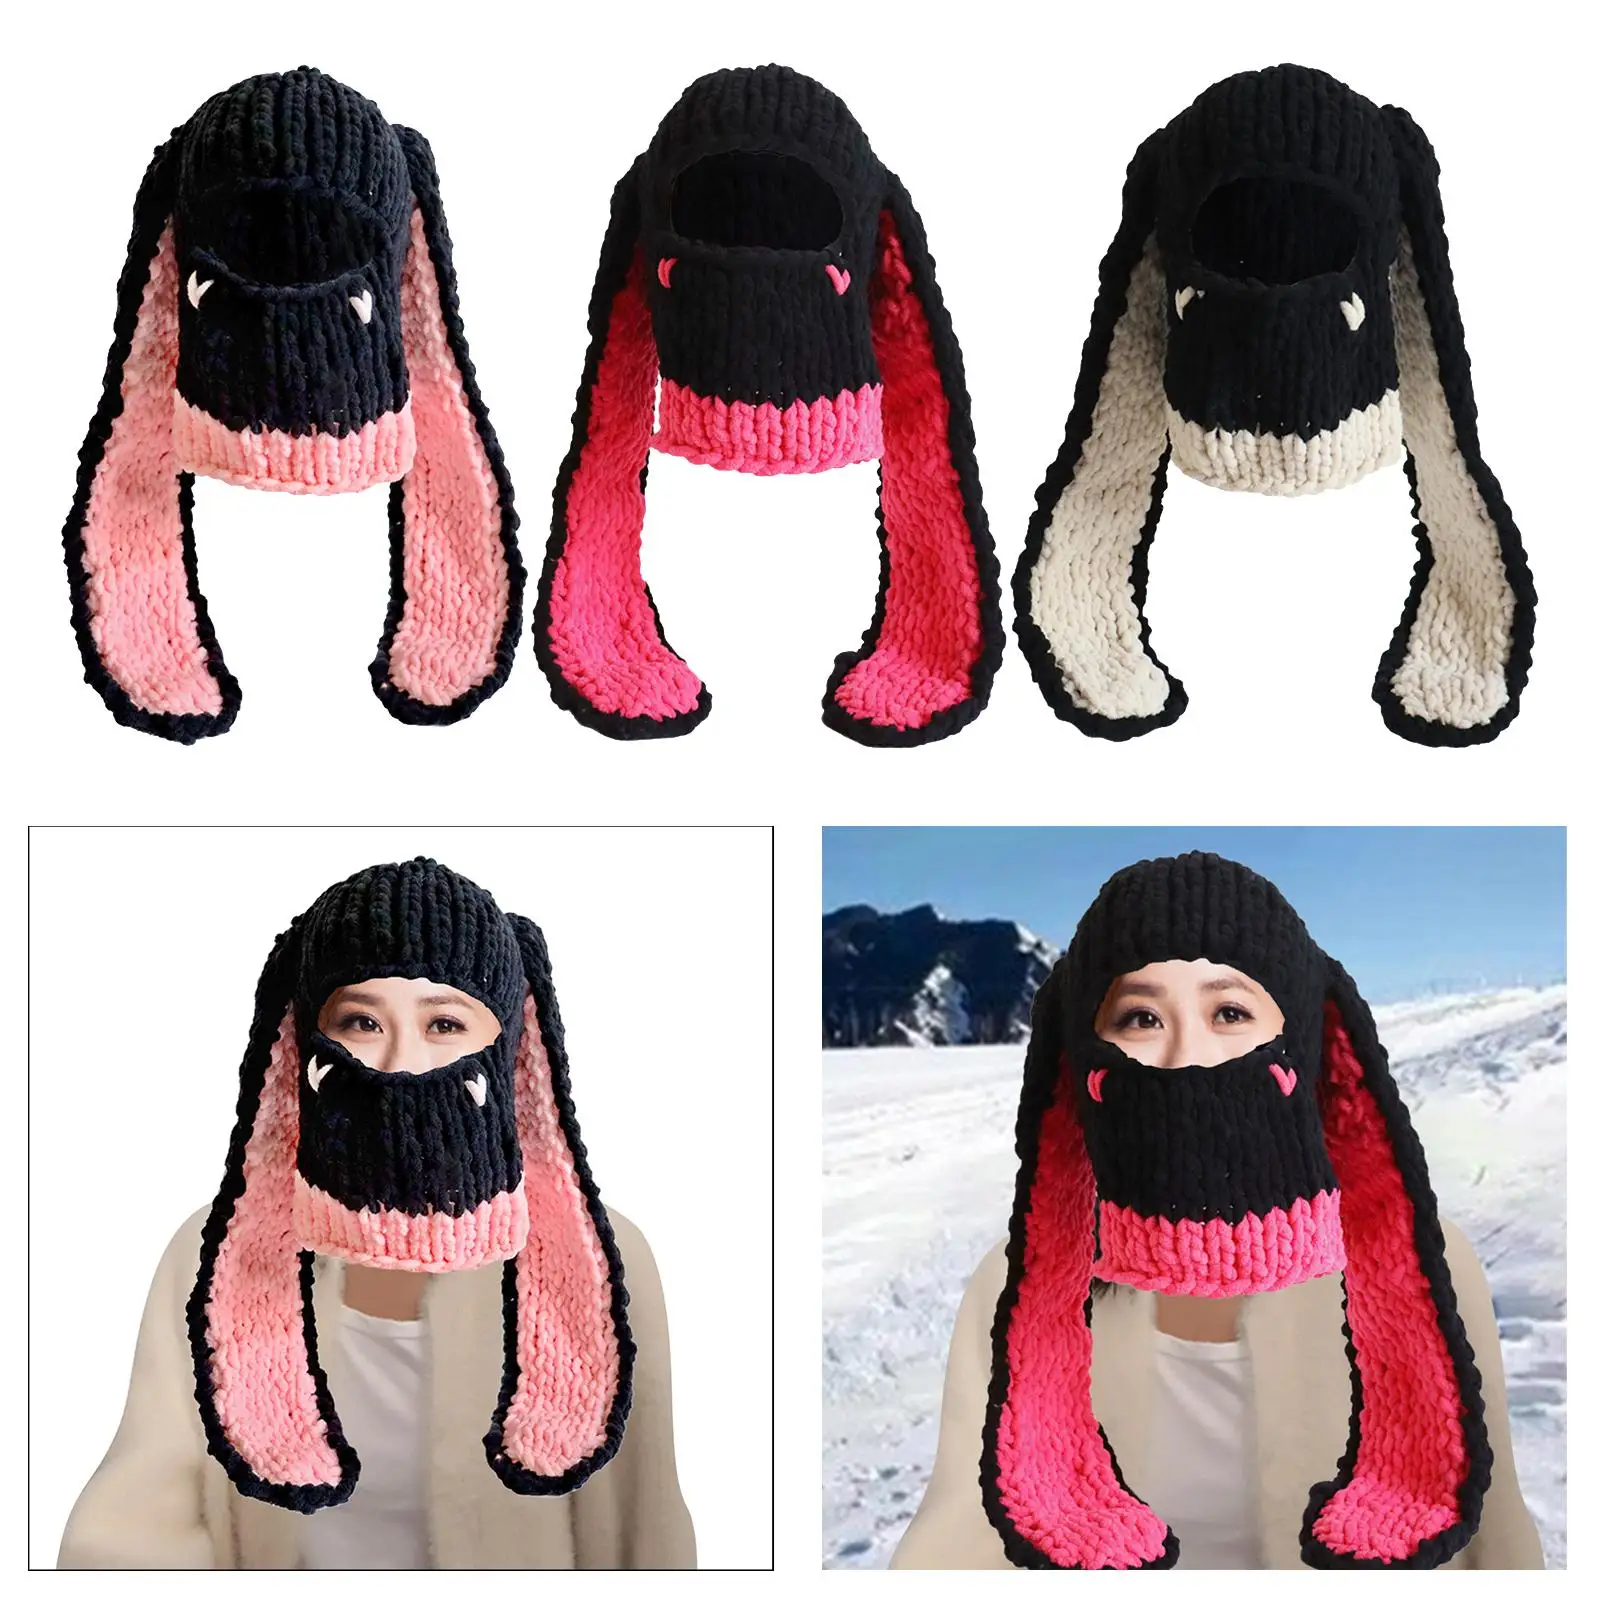 Stylsh Winter Knitted Hat for Women Girl Neck Warmer Rabbit Ears Beanie Hats